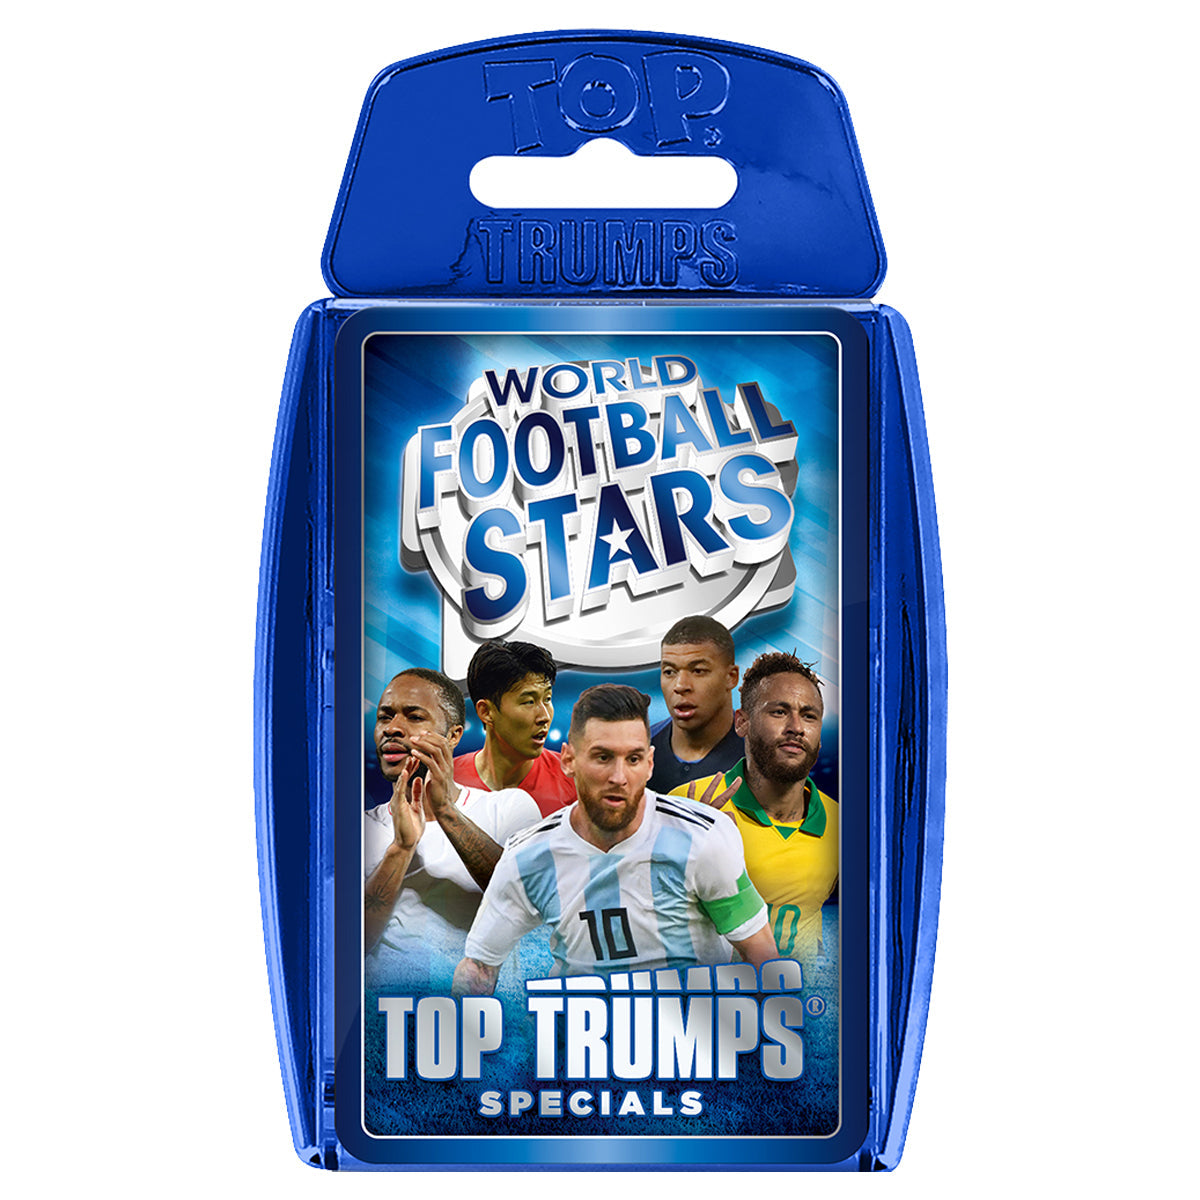 Top Trumps – World of Football Stars (Blue)